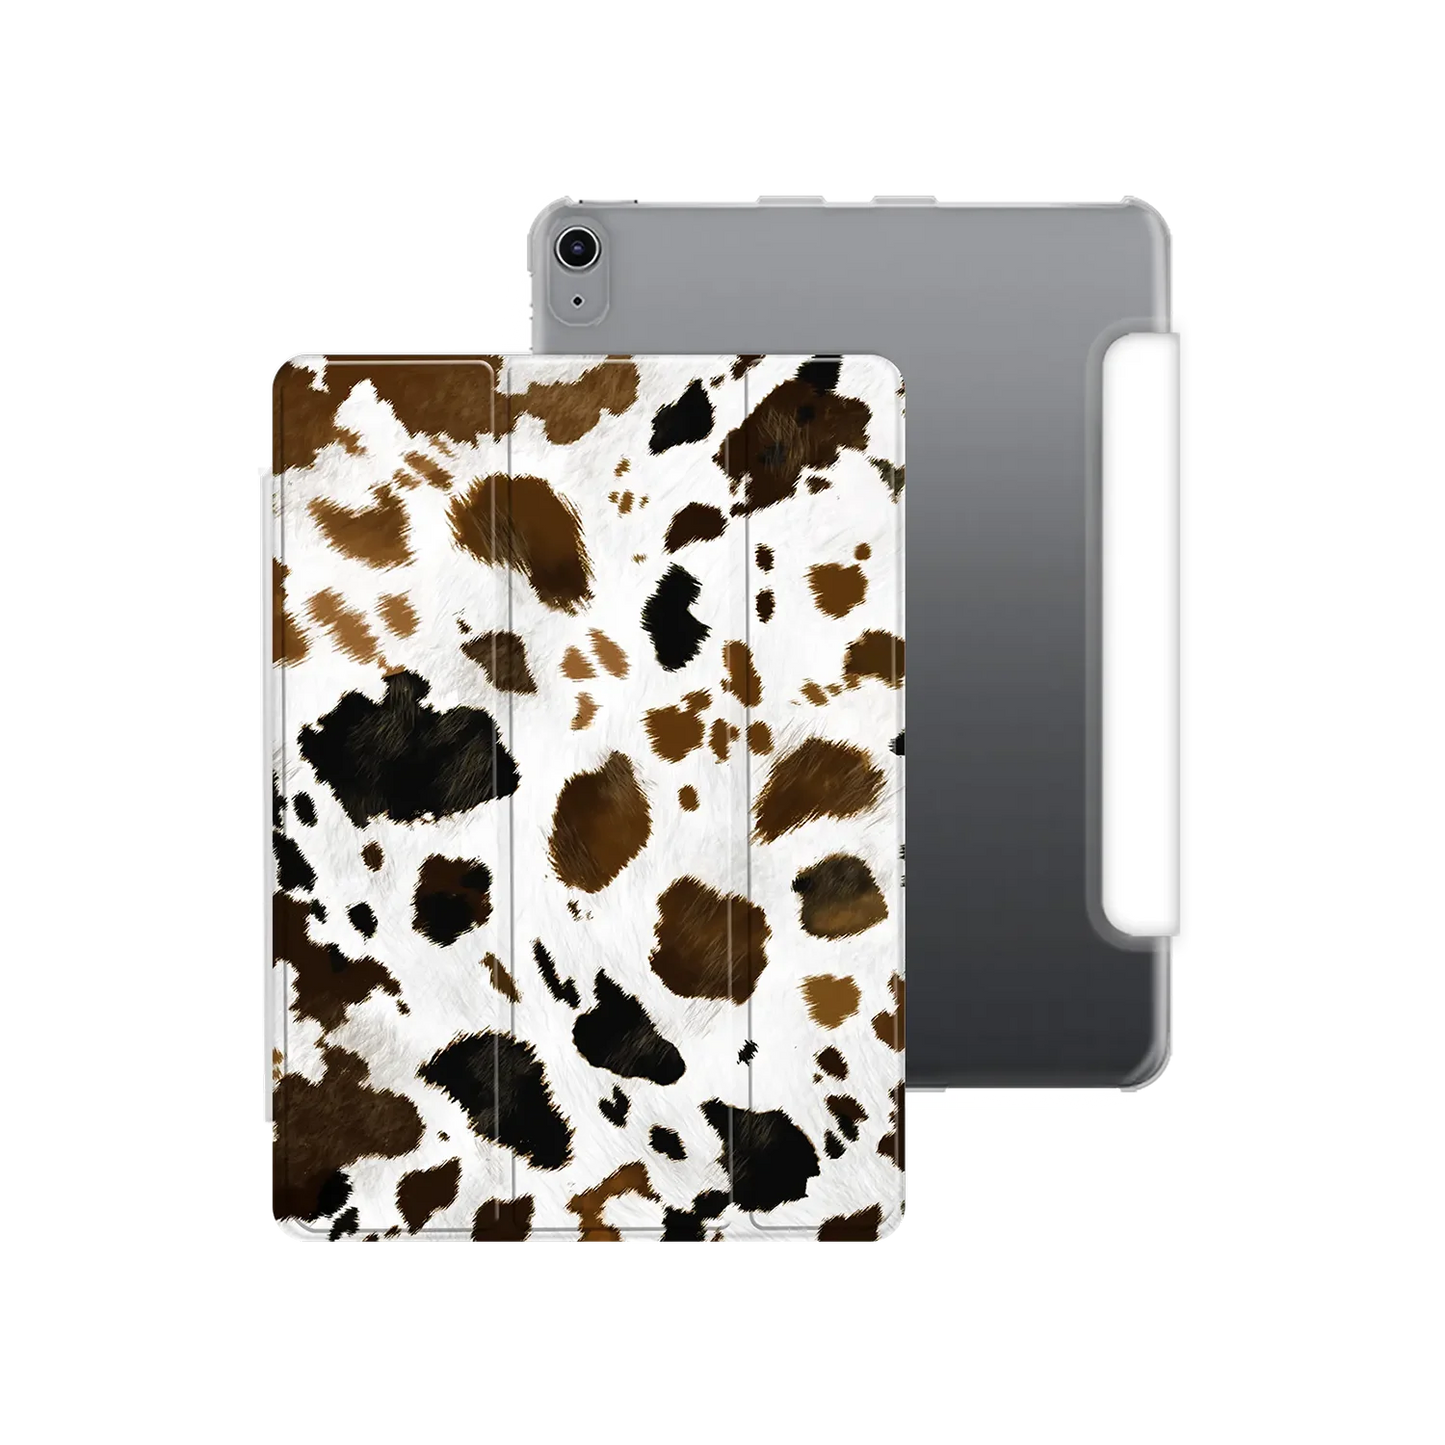 Moo Print - Custom iPad Case